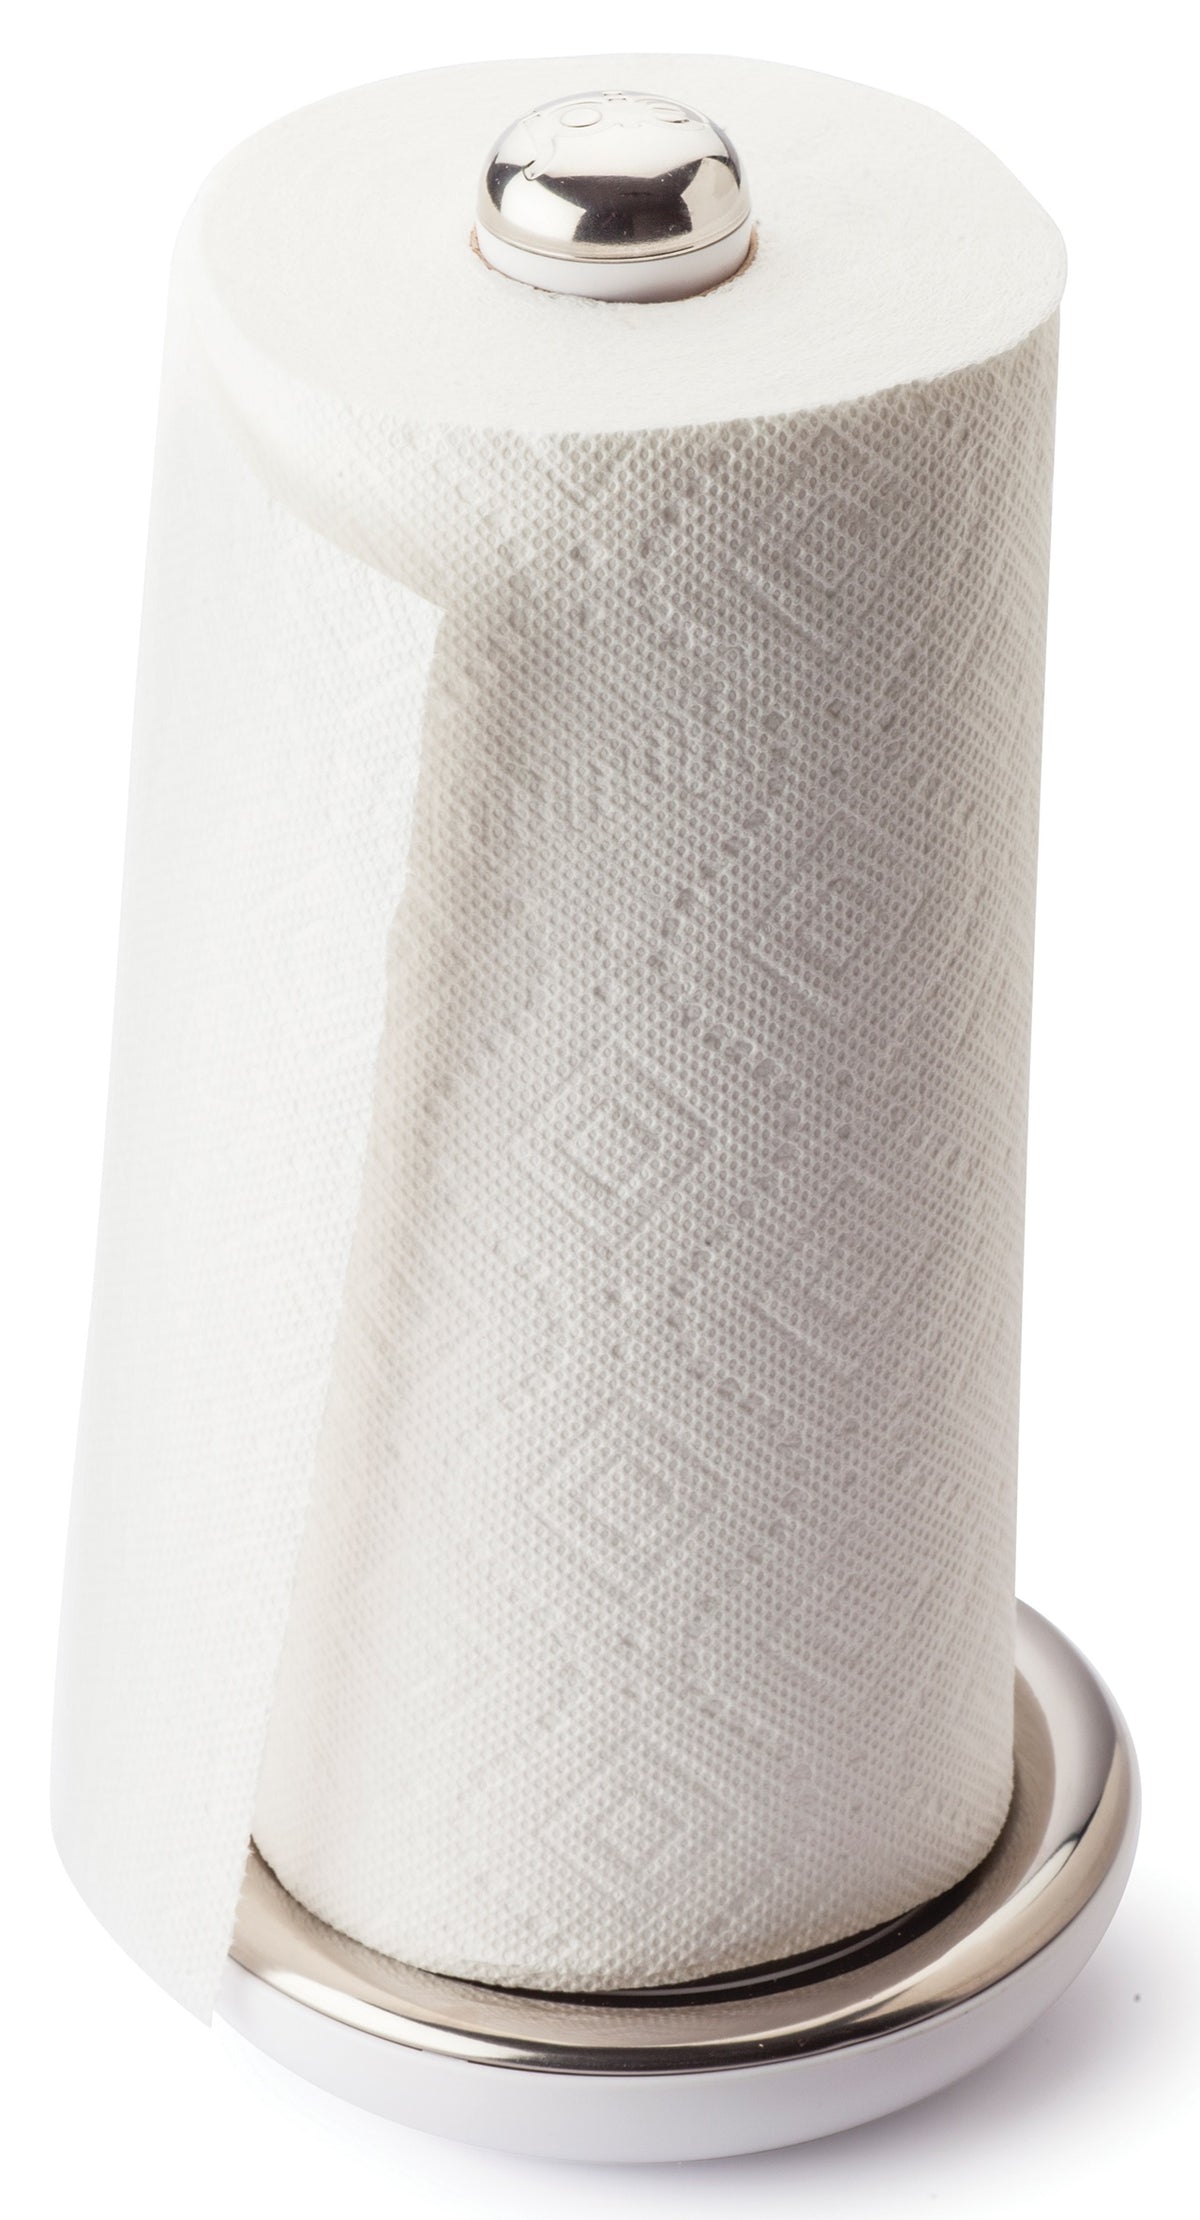 Joie MSC 35401 Paper Towel Holder, Assorted Colors